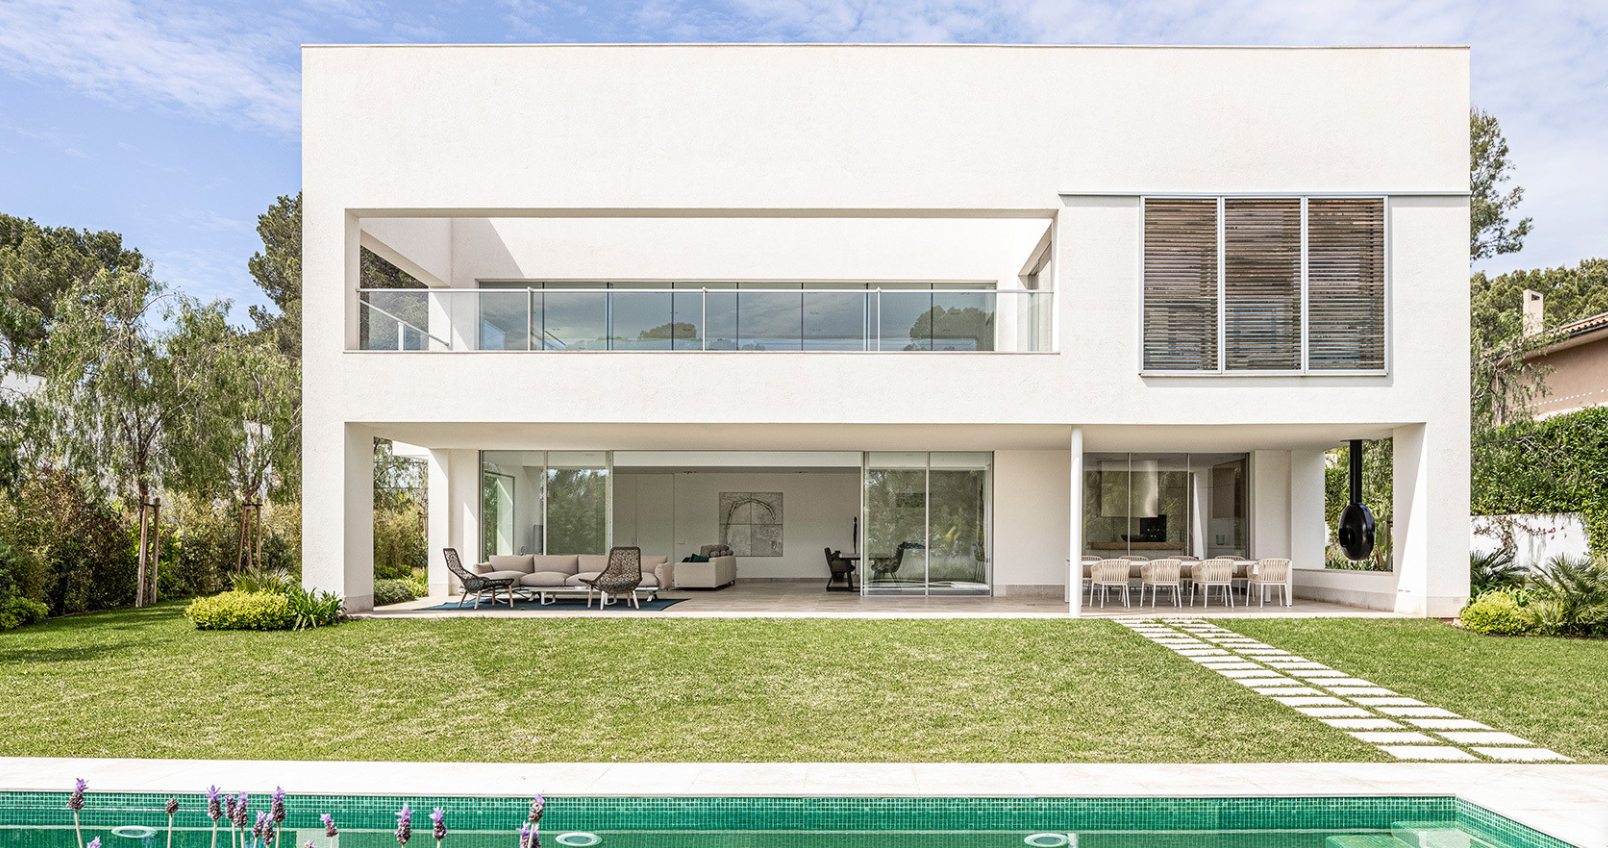 A vendre Magnifique Villa de prestige 440 m2 pleine nature à Mallorca